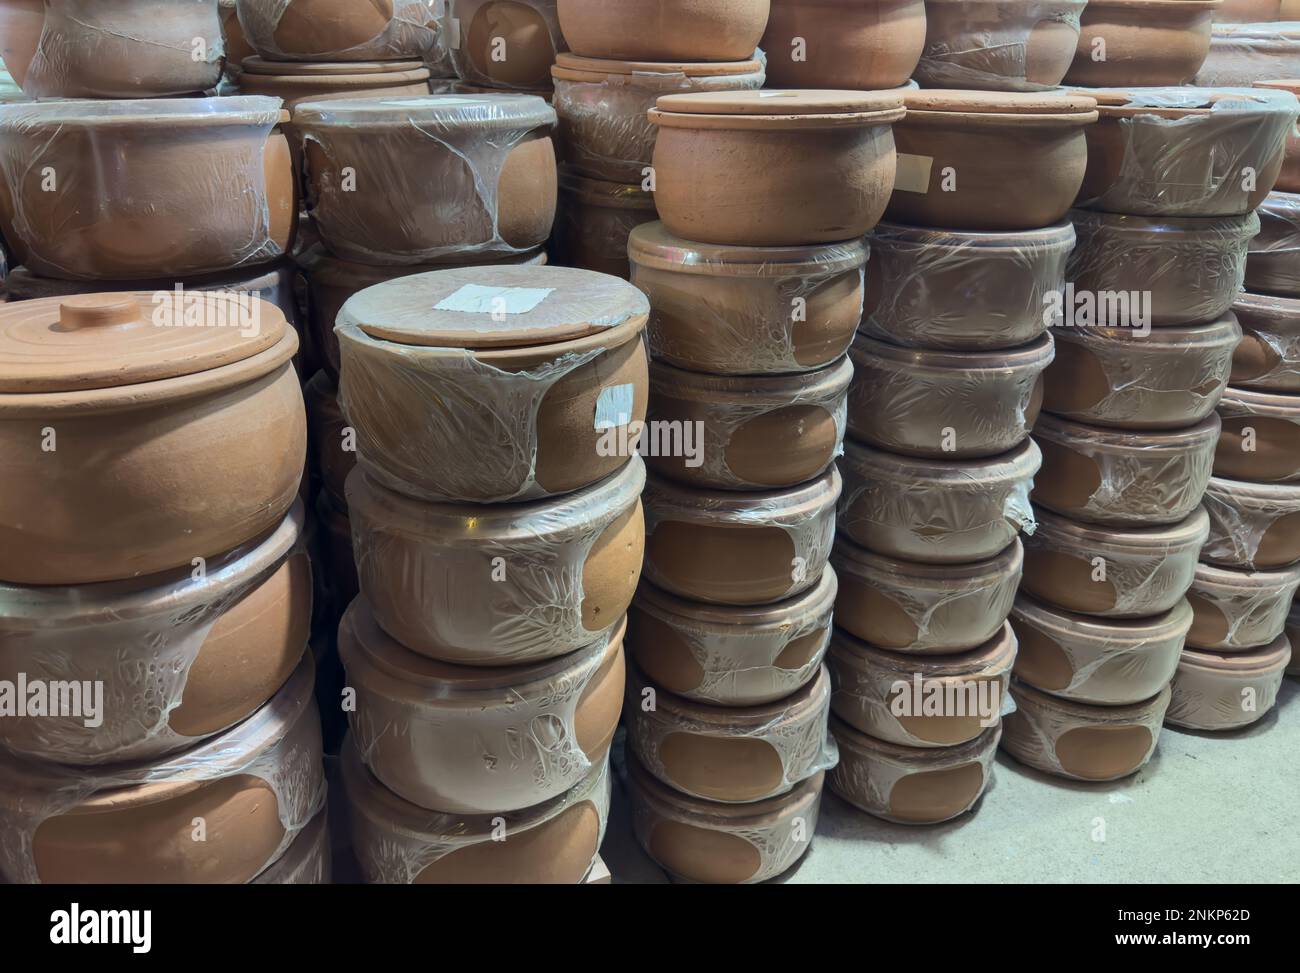 Earthen pots. Turkish earthenware cooking pots. Anatolian traditional kitchen utensils. Stock Photo